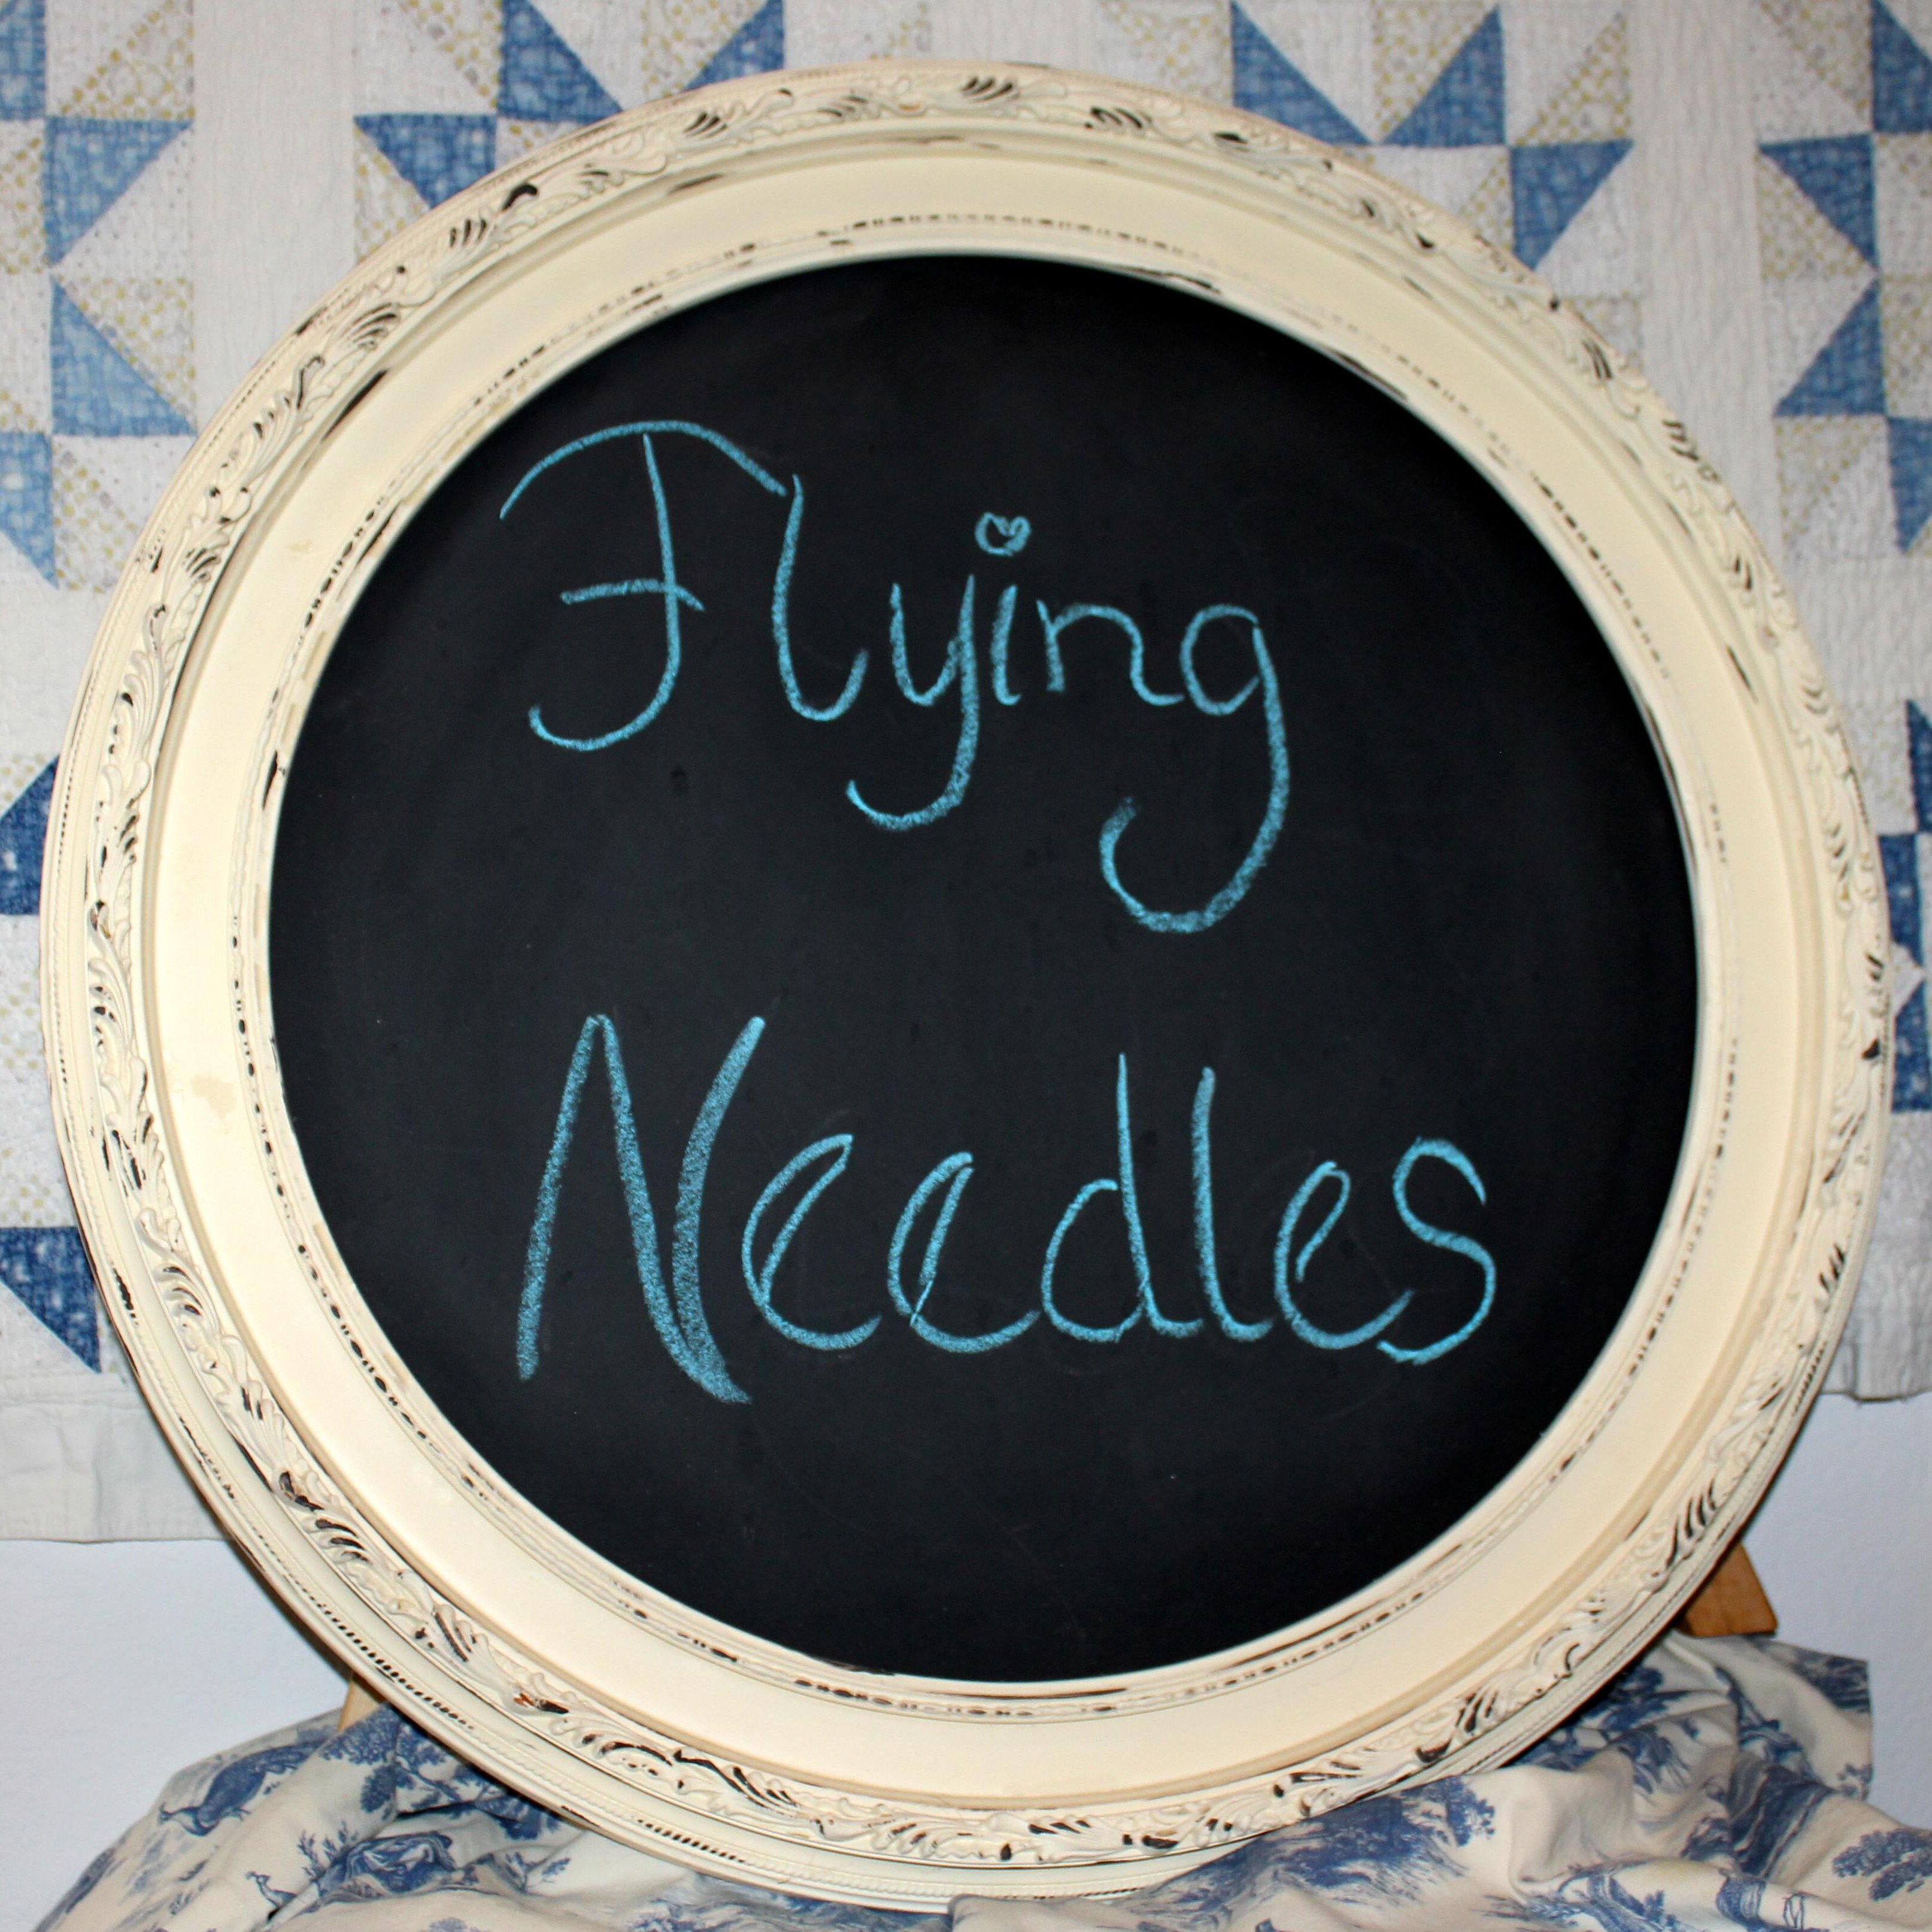 RowesFlyingNeedles - Flying Needles